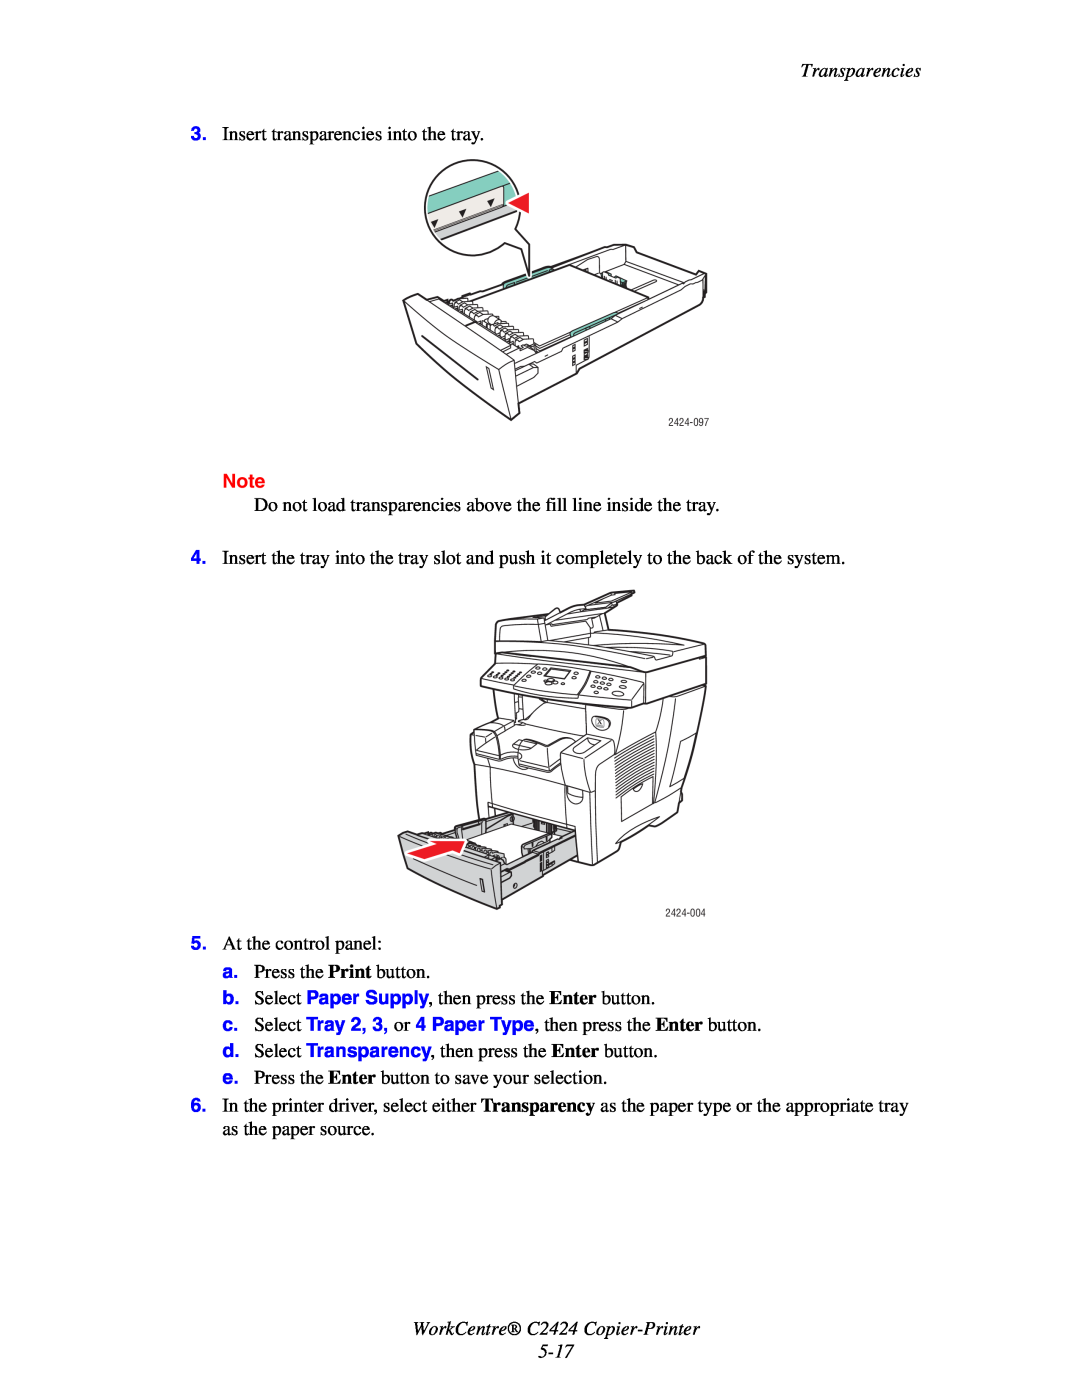 2Wire C424 manual WorkCentre C2424 Copier-Printer, Transparencies 